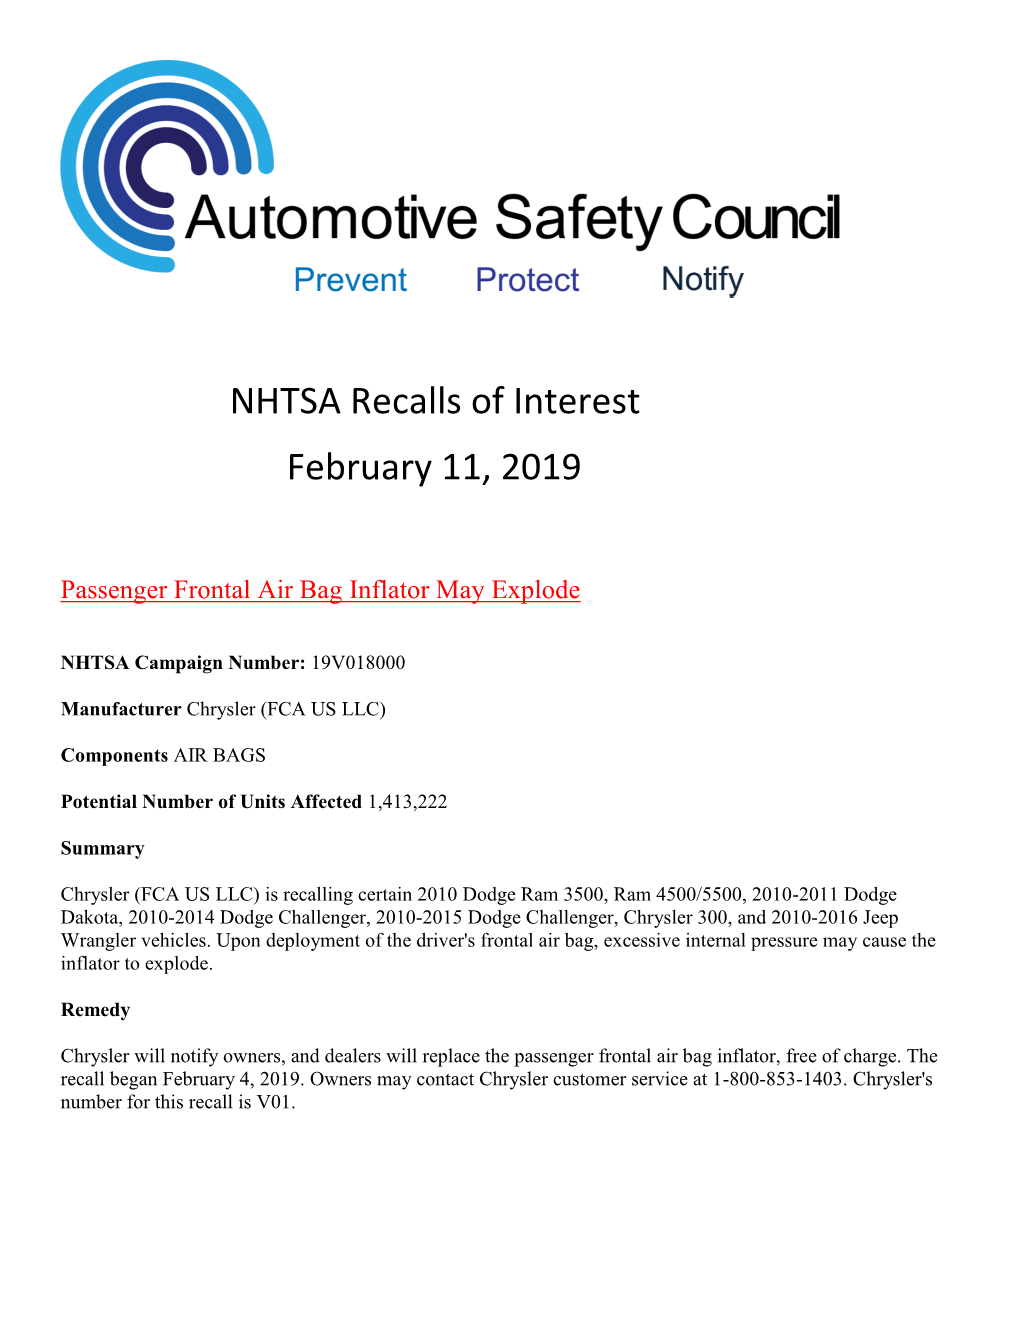 NHTSA Recalls of Interest February 11, 2019